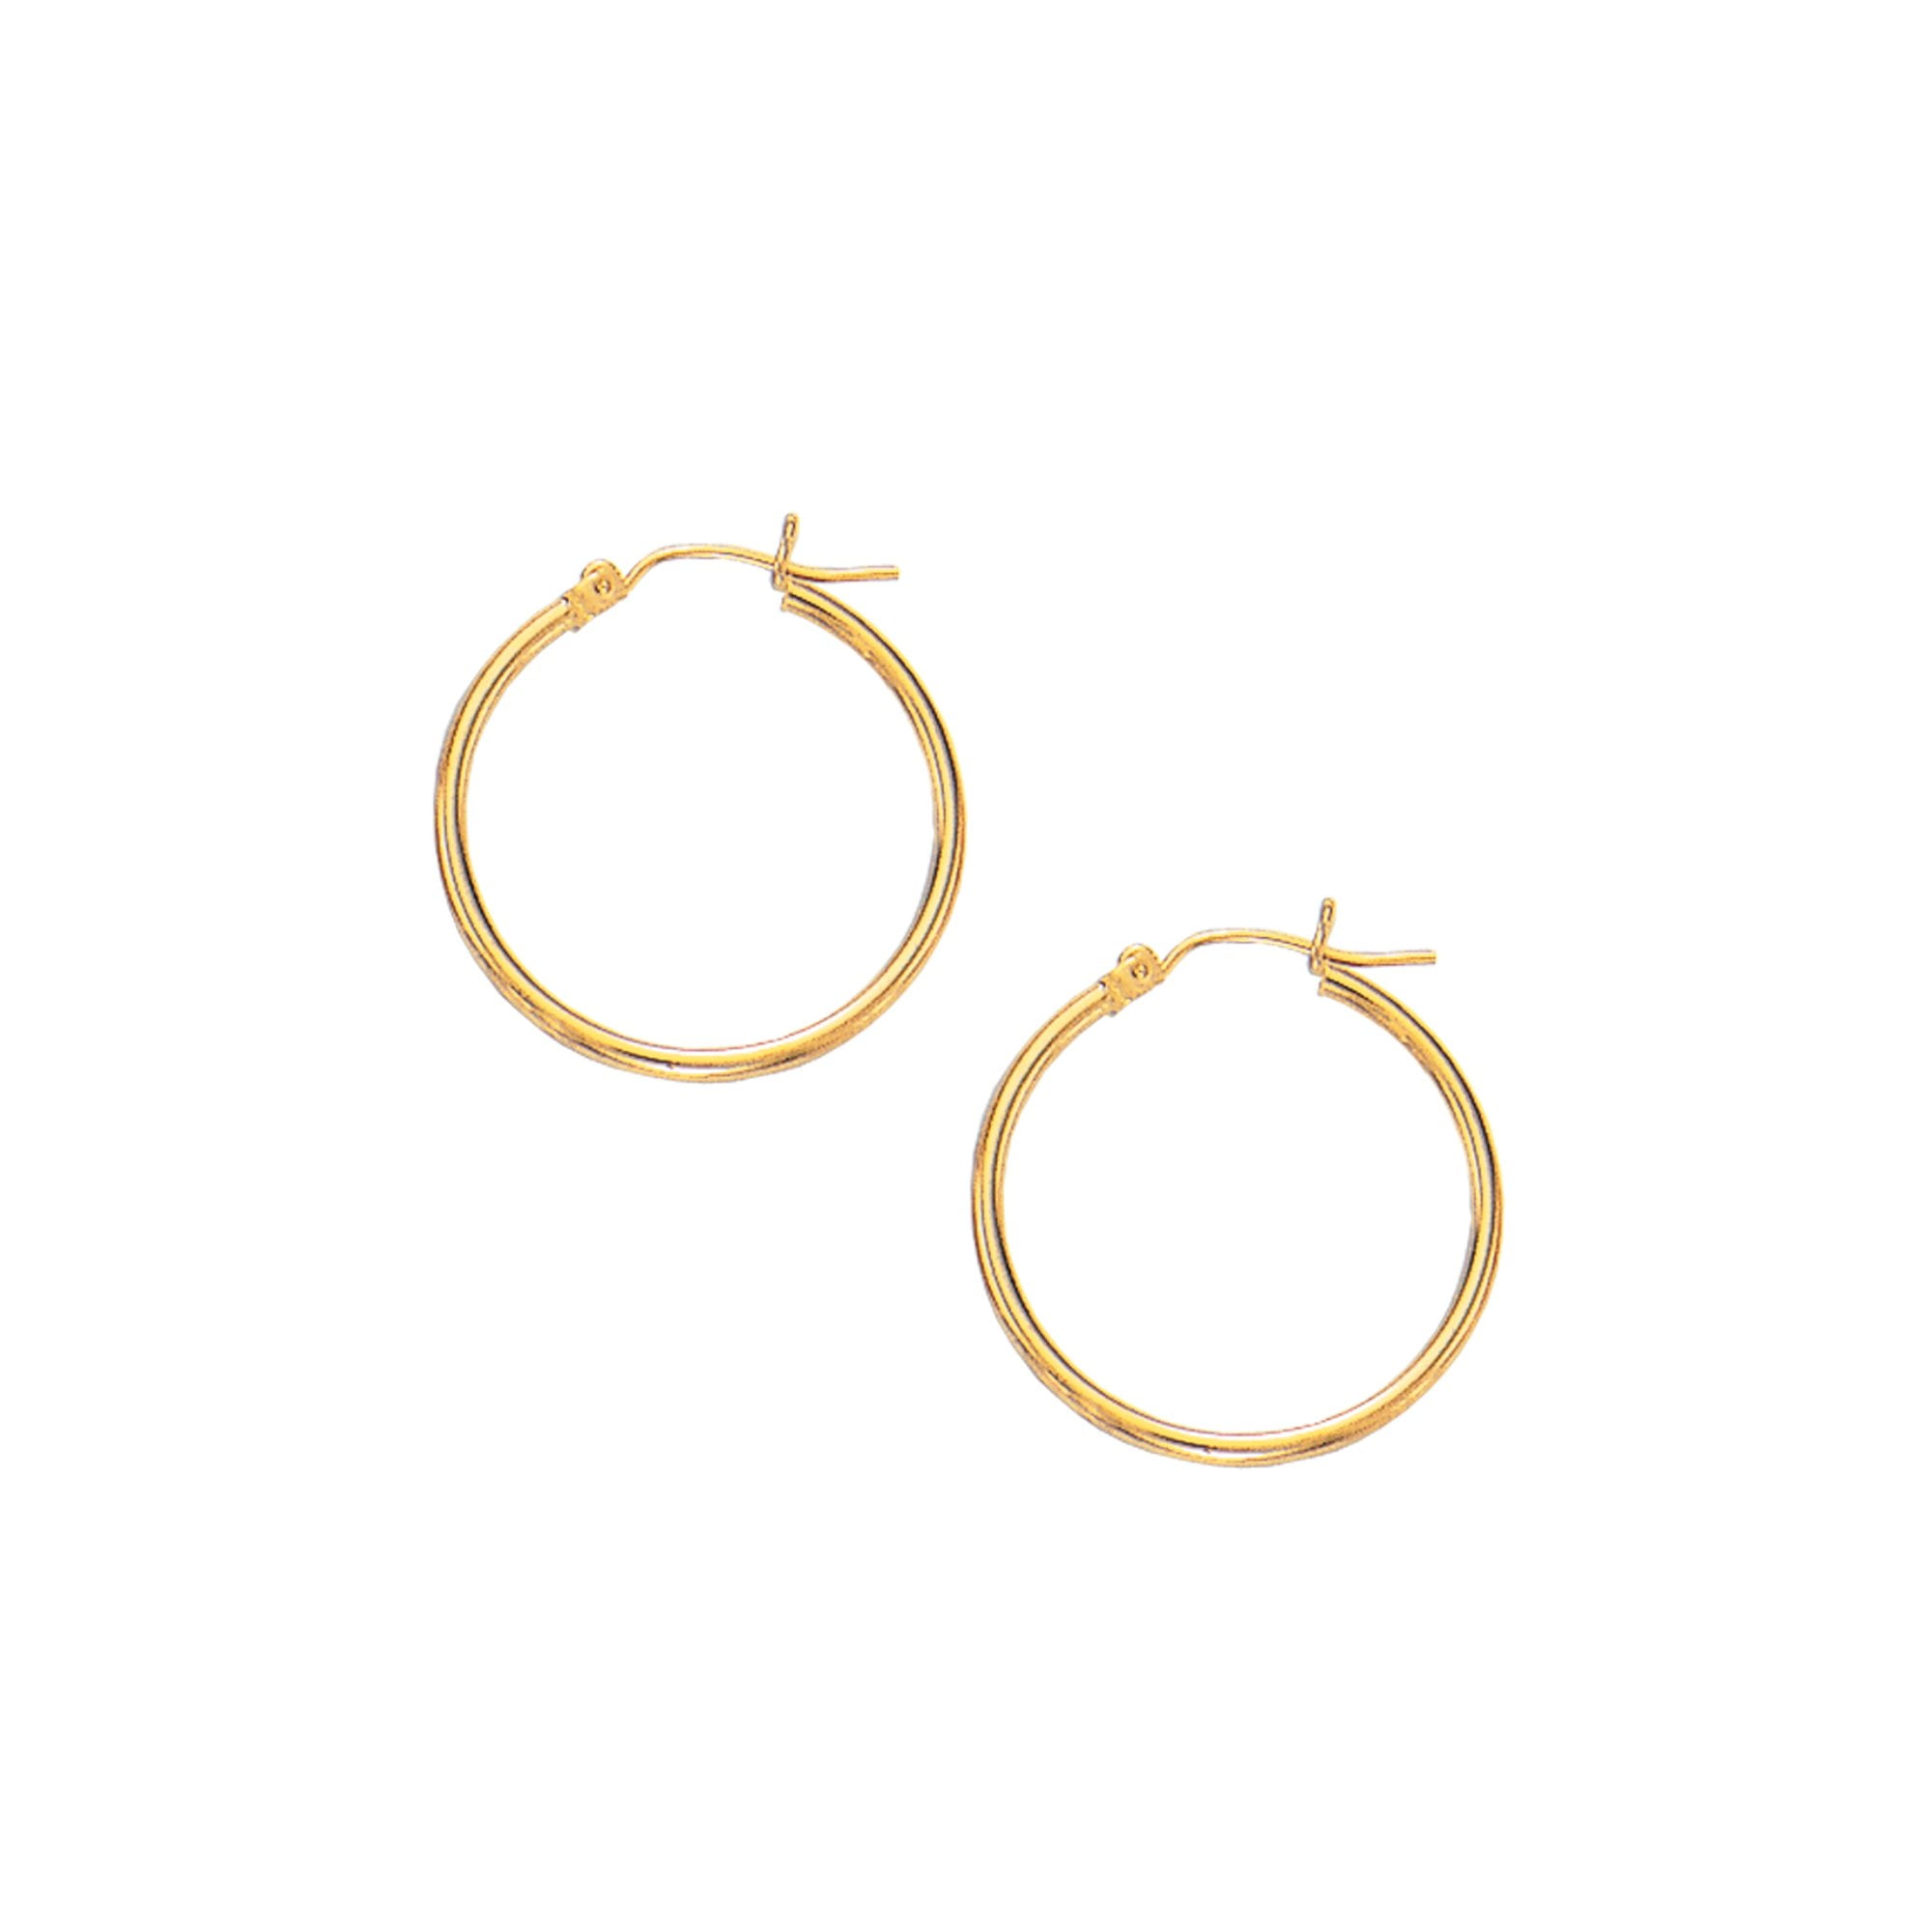 10k Gold Polished 2mm Round Hoop Earrings 0.35 in x 0.08 in